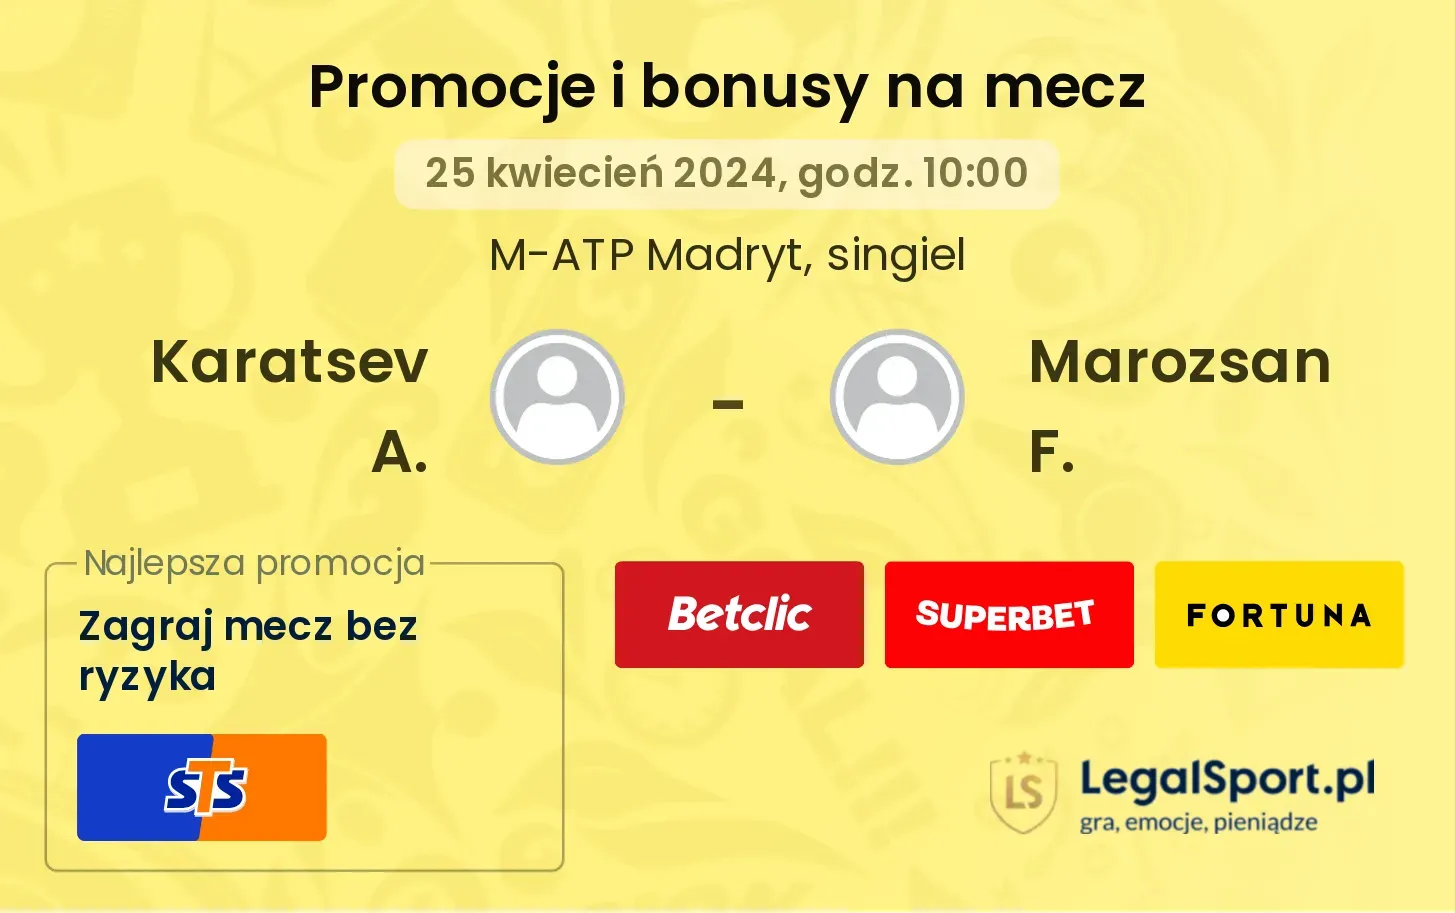 Karatsev A. - Marozsan F. promocje bonusy na mecz